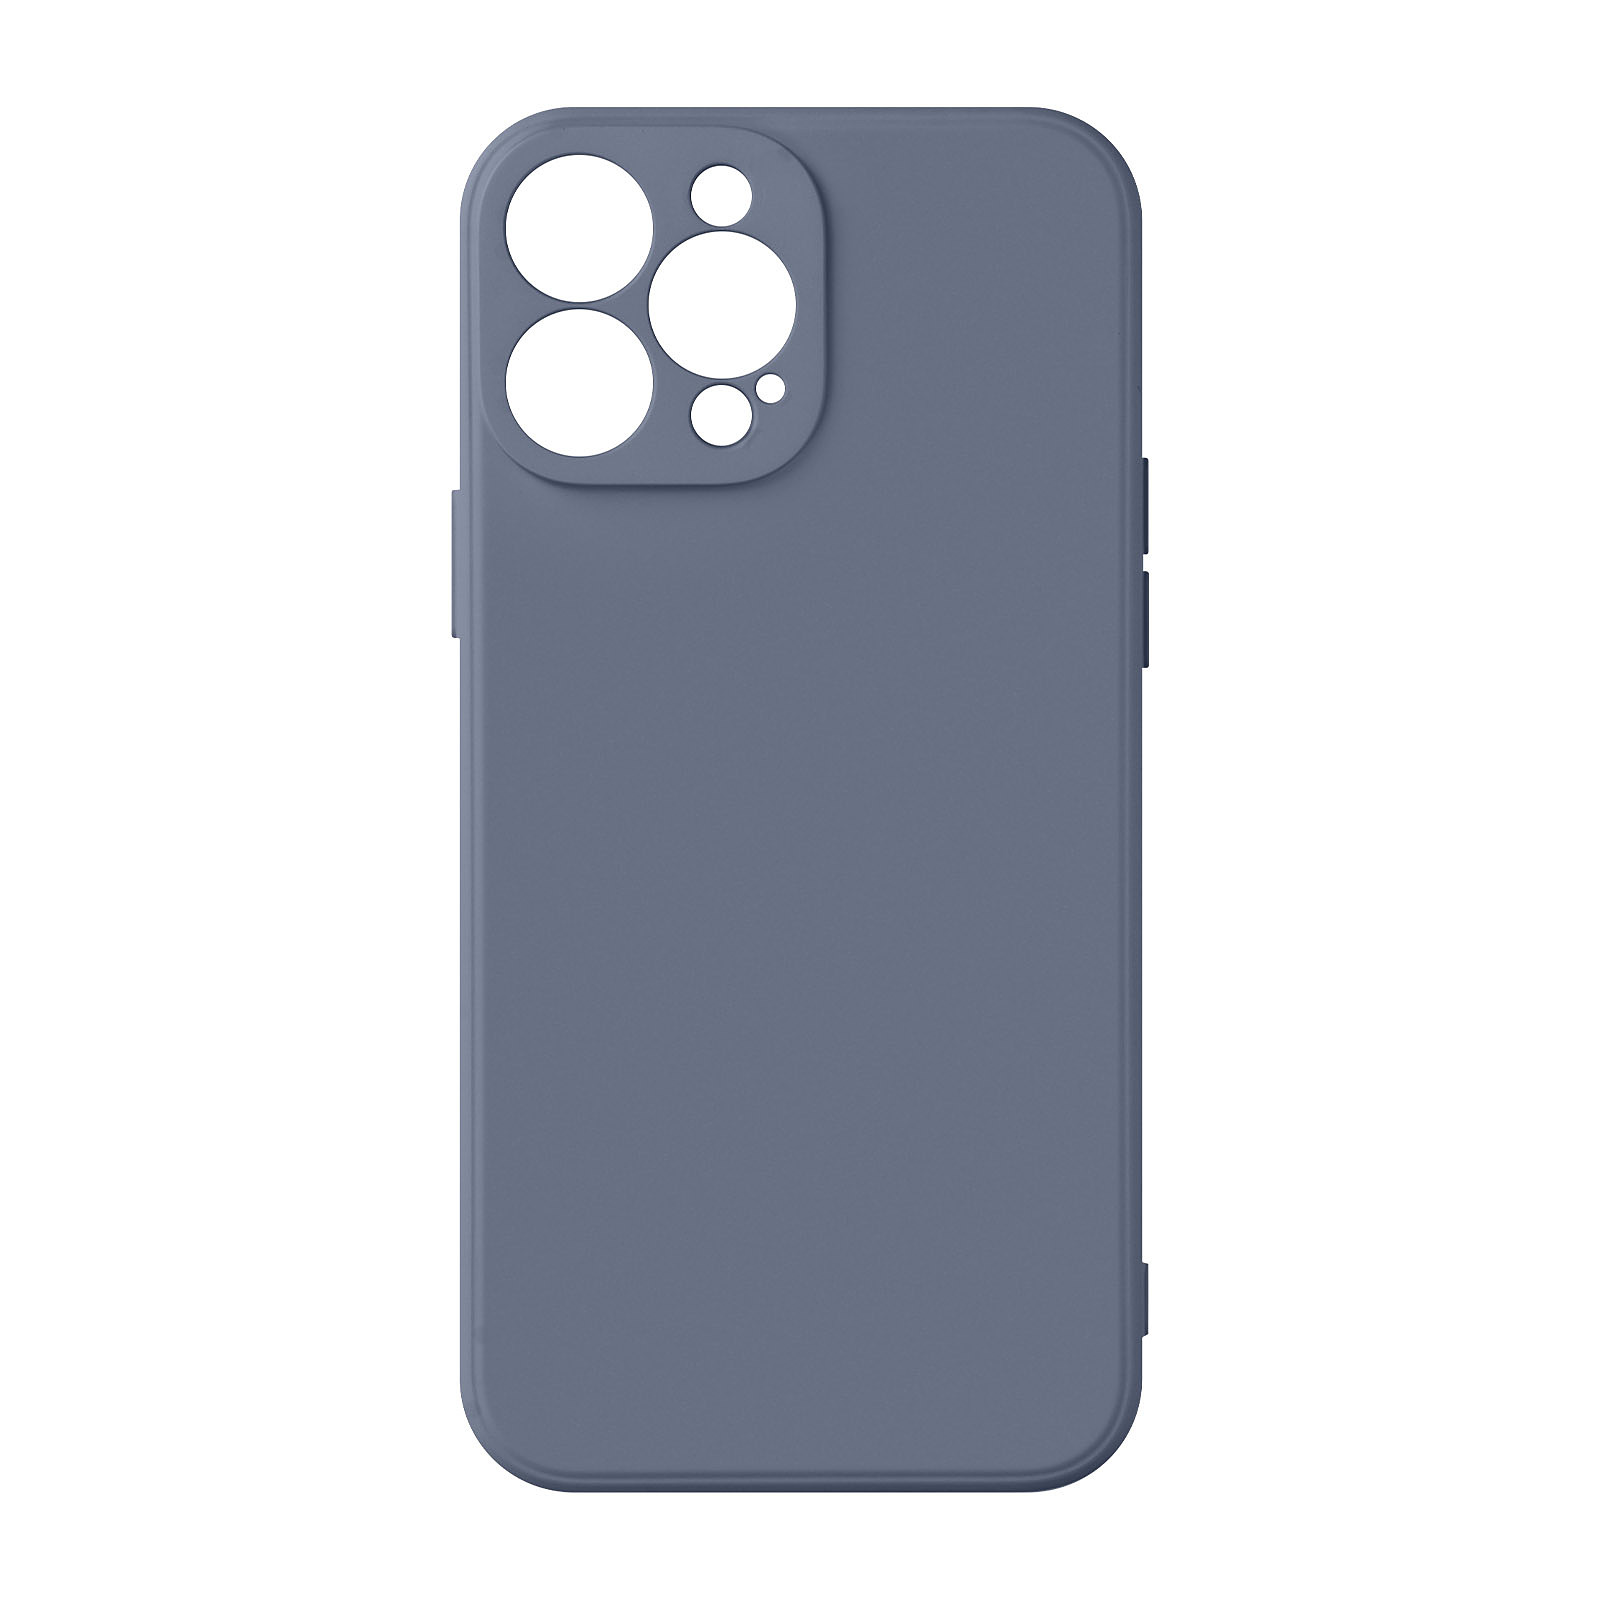 Avizar Coque pour iPhone 13 Pro Max Silicone Semi-Rigide avec Finition Soft Touch Bleu - Coque telephone Avizar